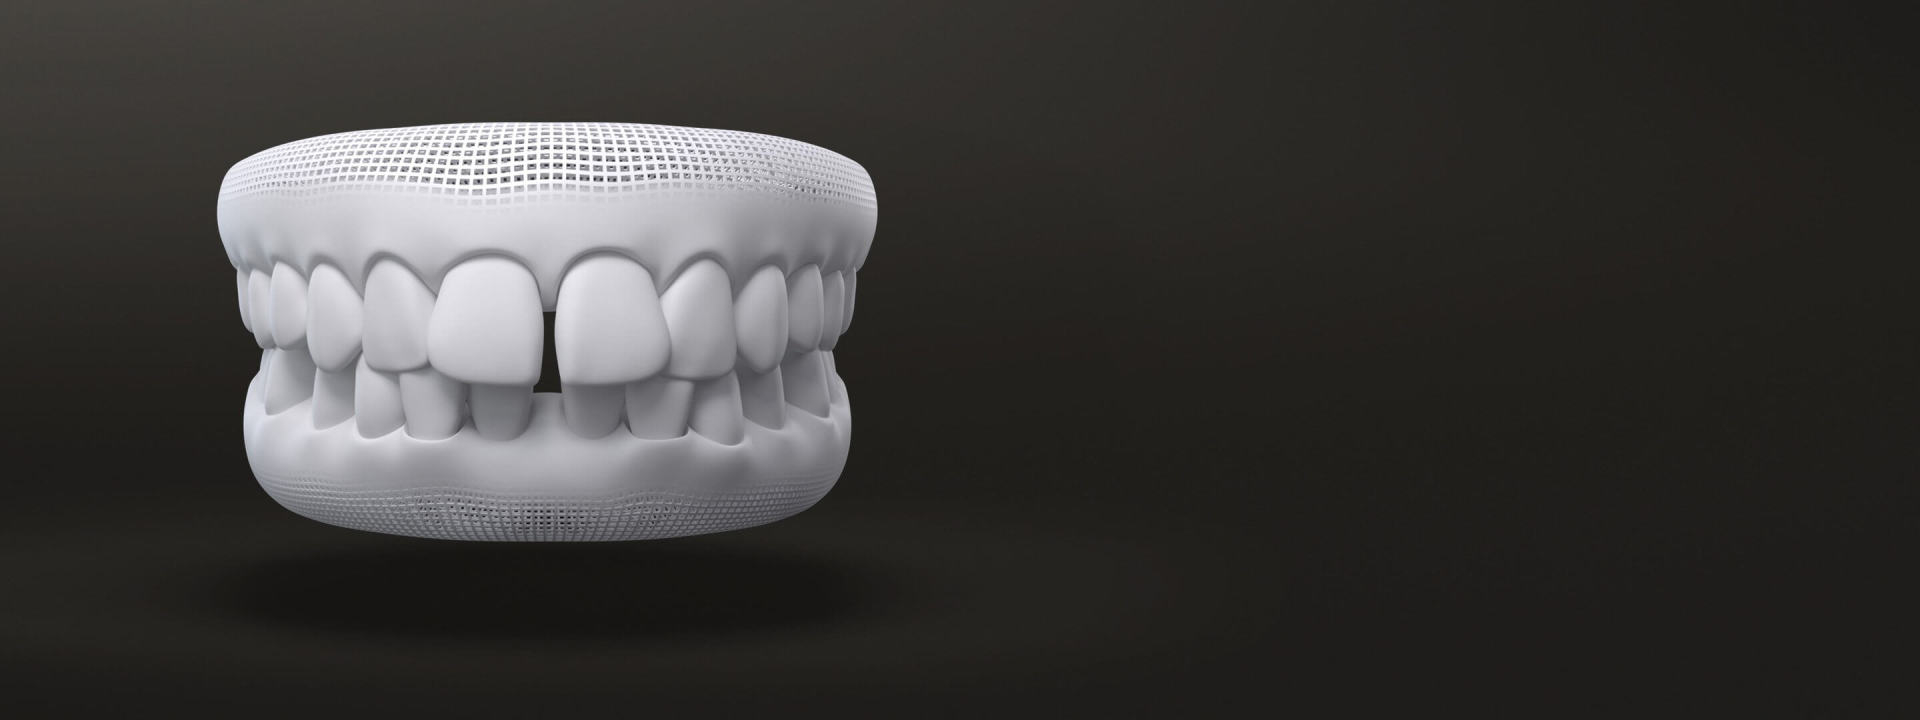 Gap teeth 3d model - Invisalign treatments - Europe